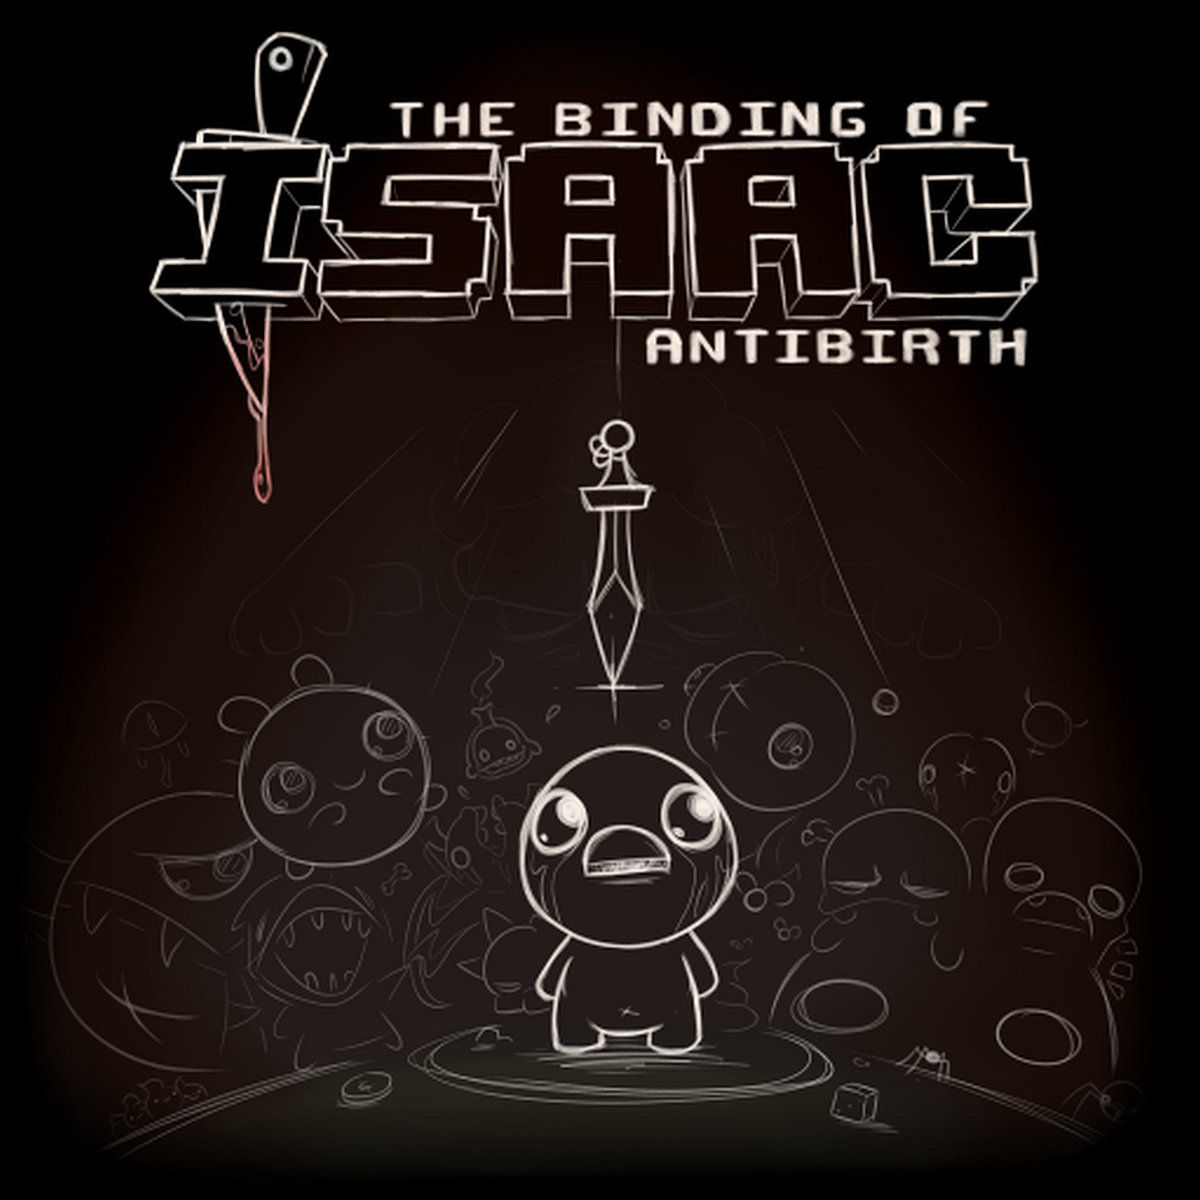 The Binding of Isaac: Antibirth - Intro